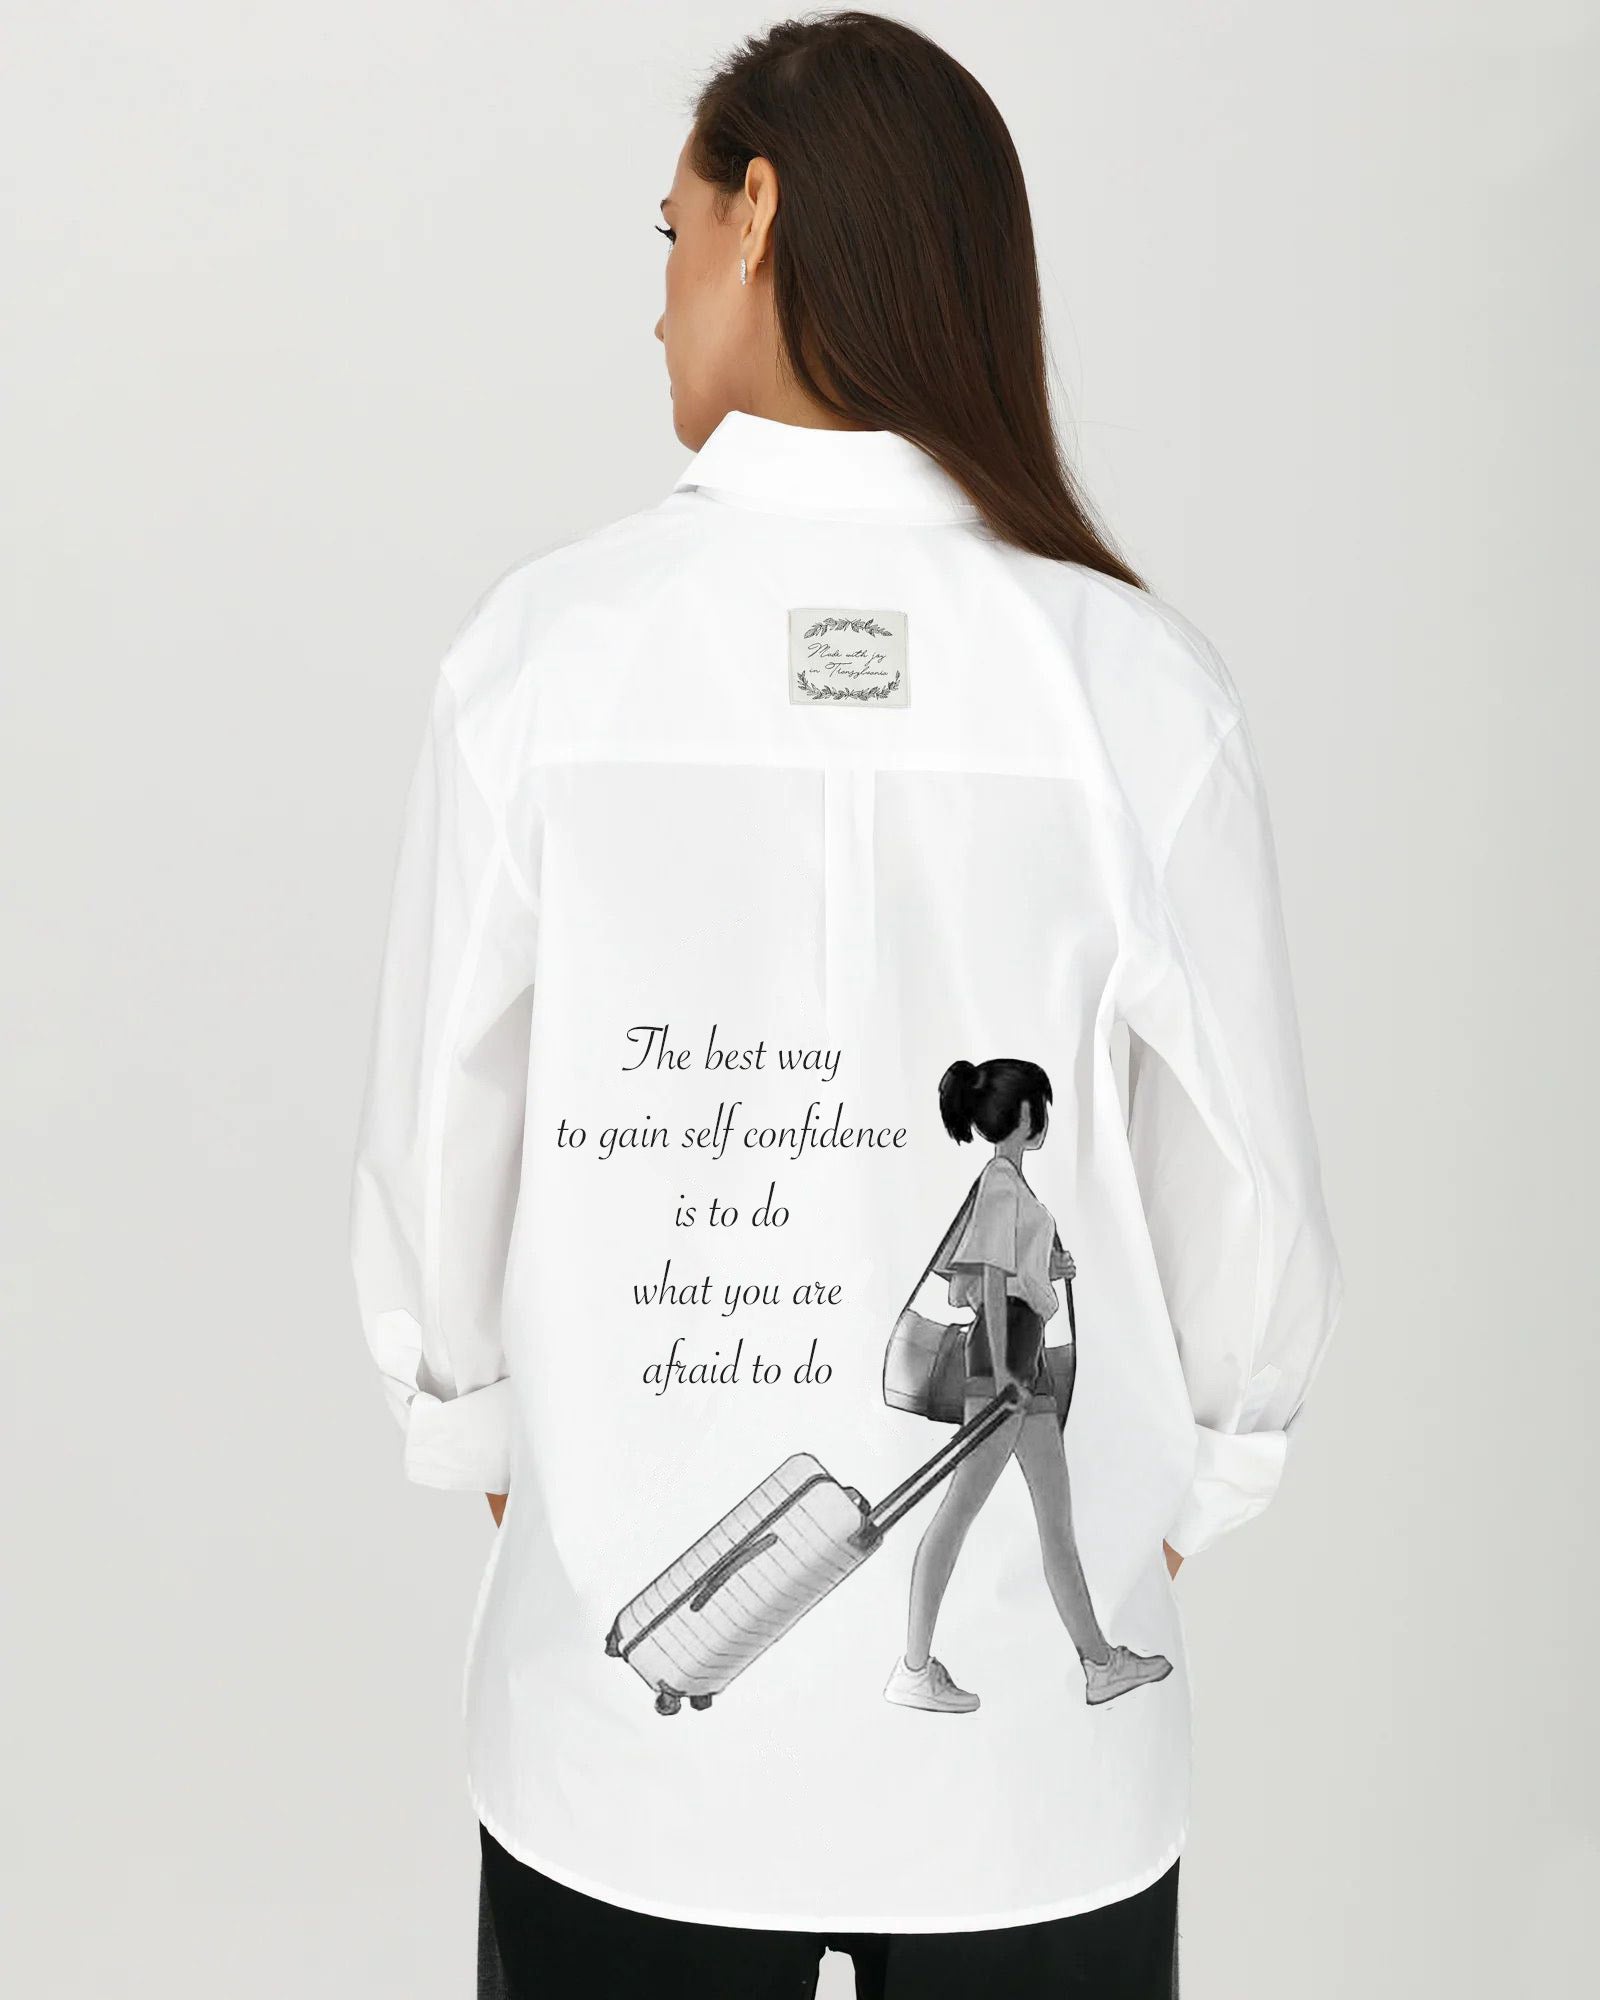 Prince shirt "Let's travel" travel motif